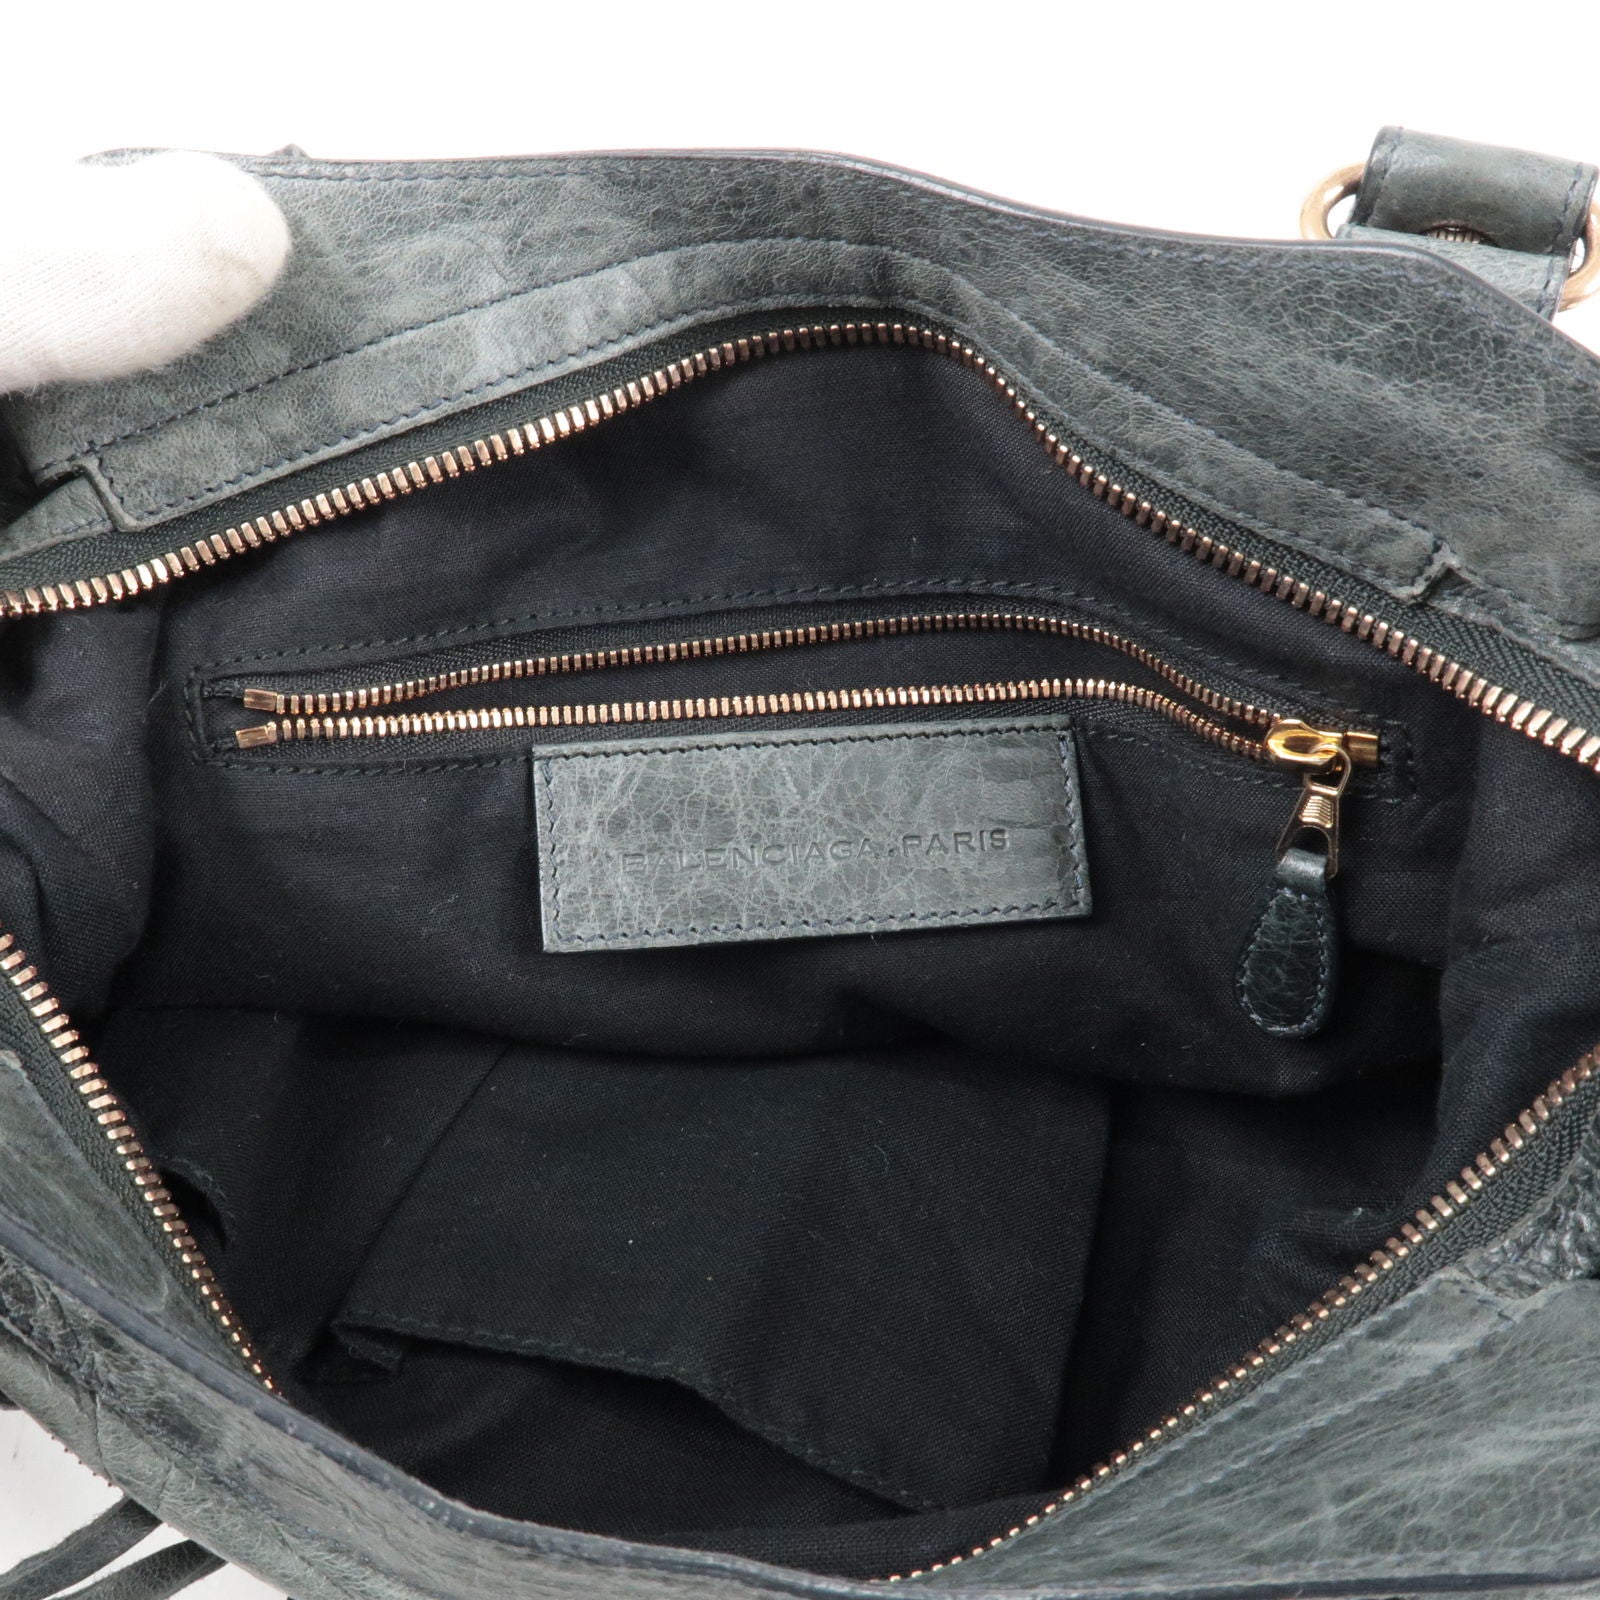 Buy Michael Kors Sullivan Large Saffiano Leather Zip-Entry Tote Bag, Black  Color Women